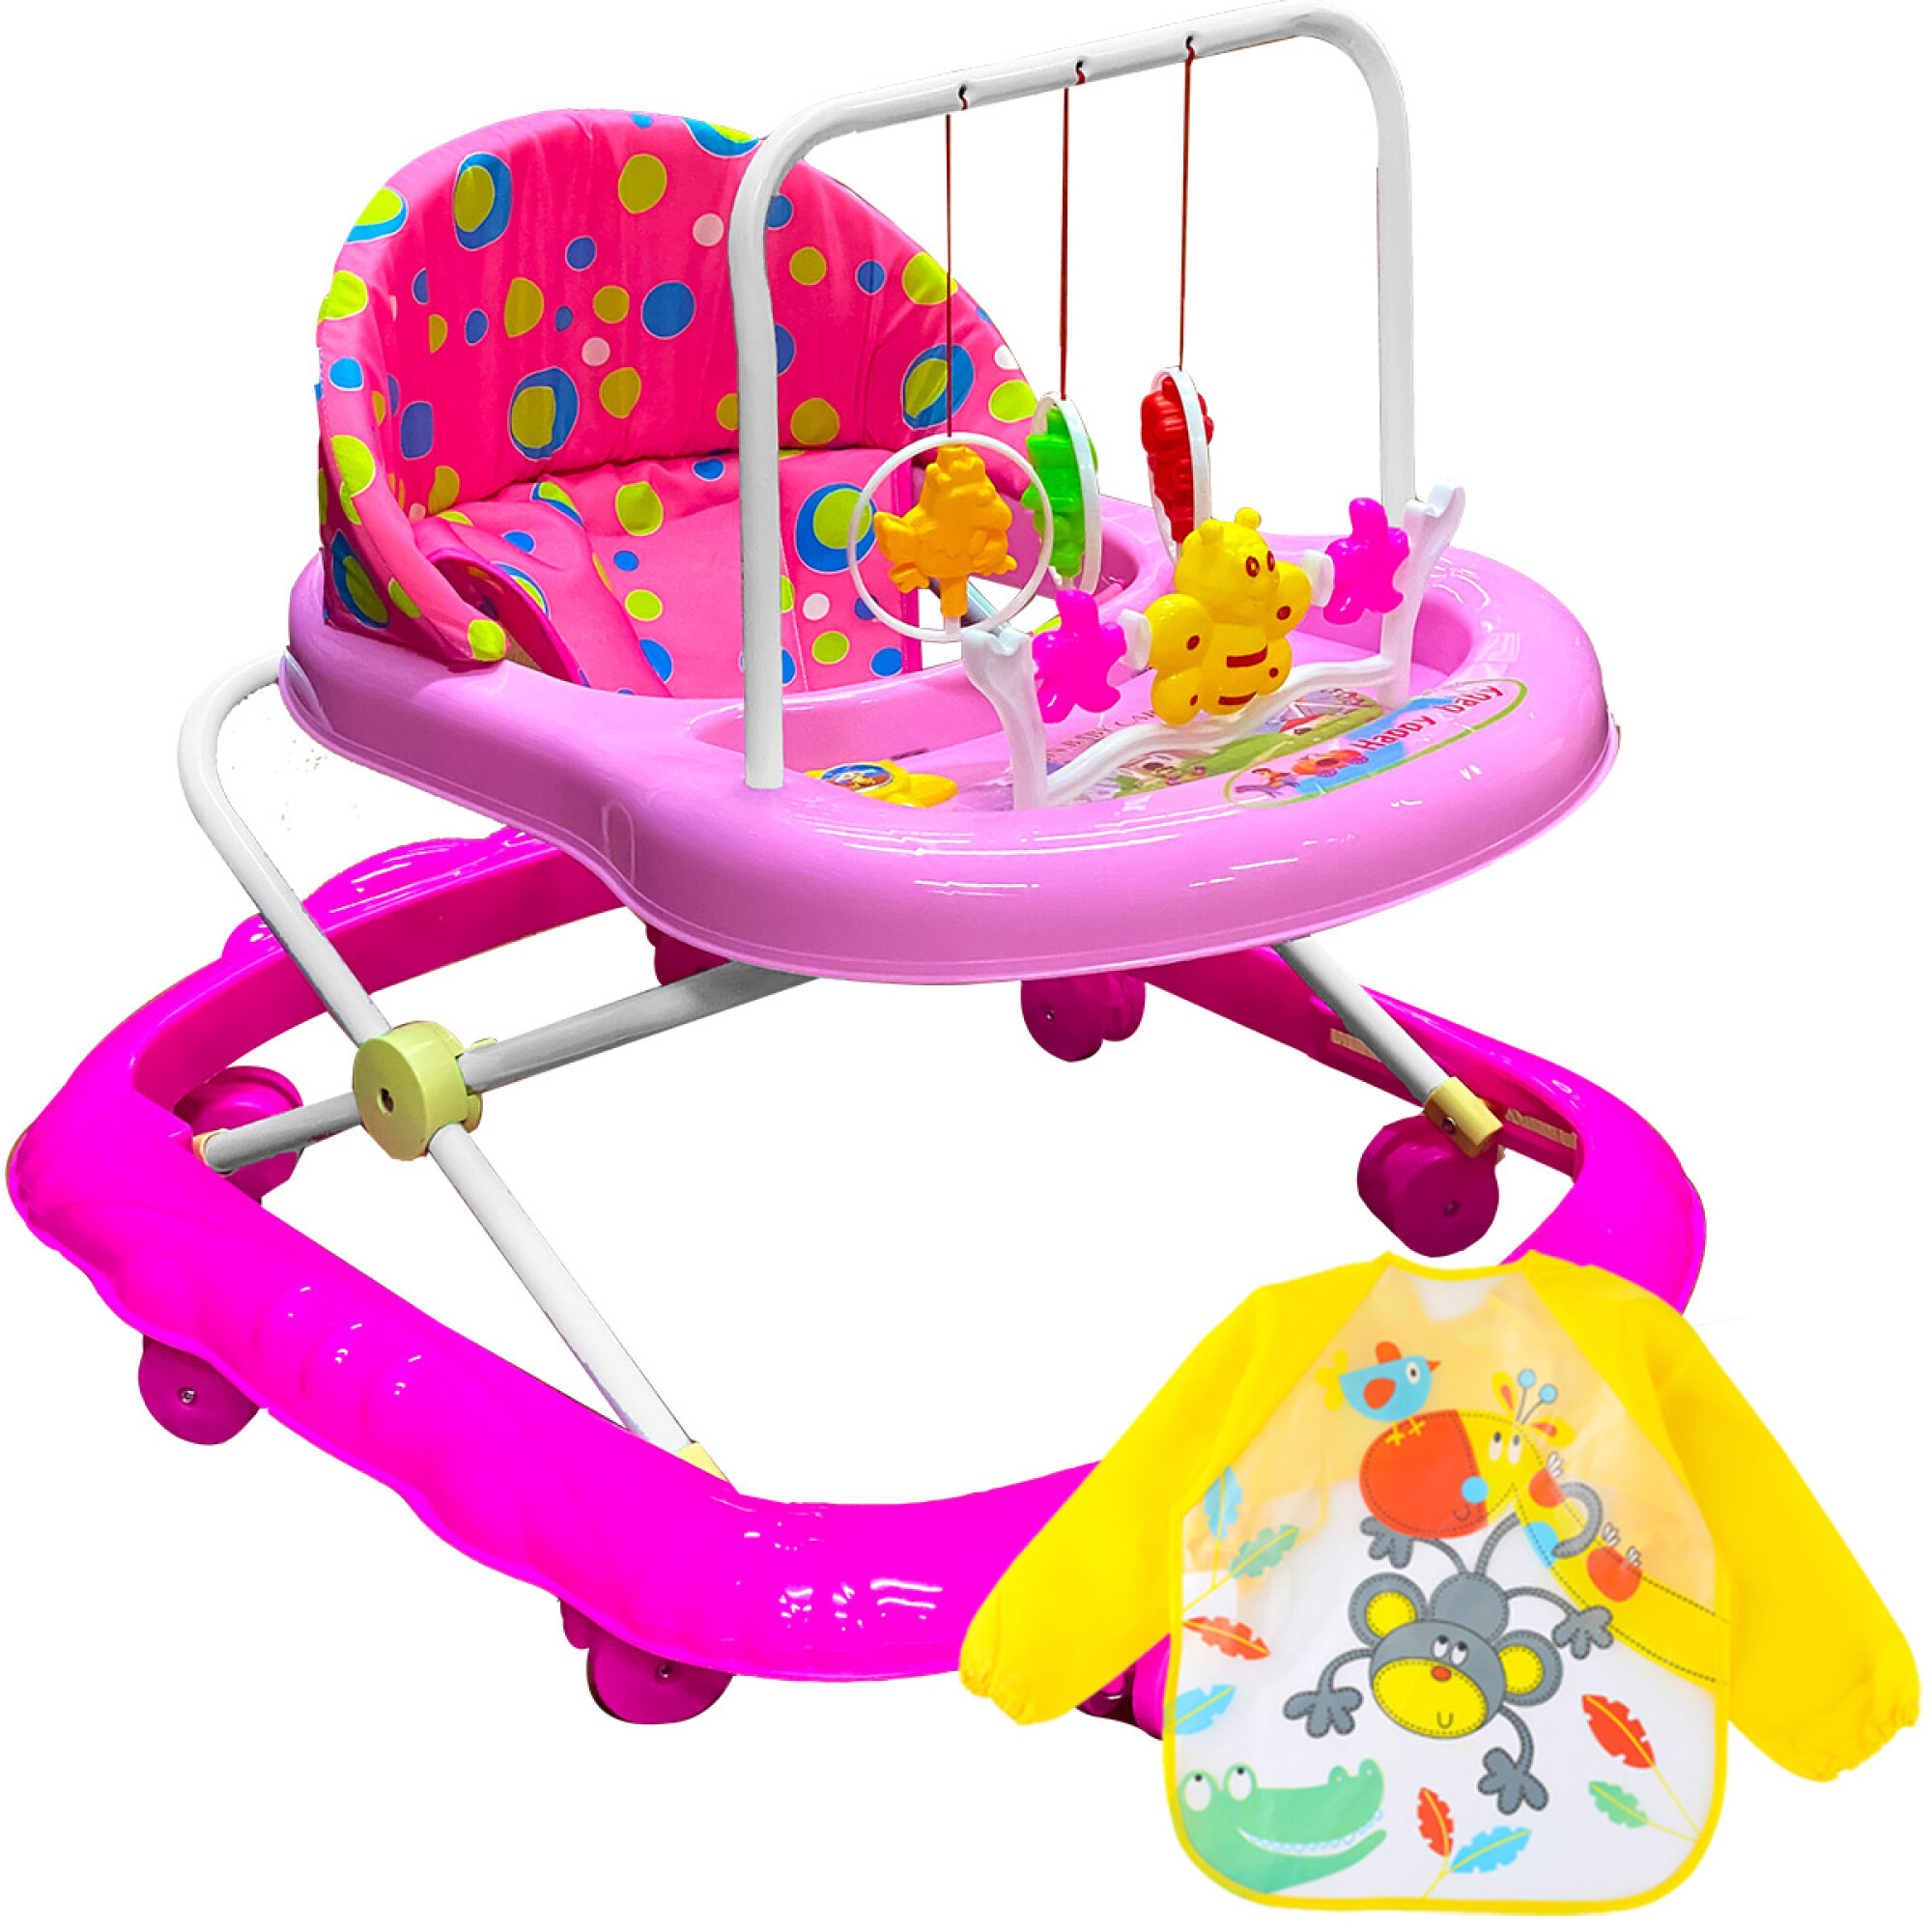 Caminador para bebé color rosado Ref AJ135